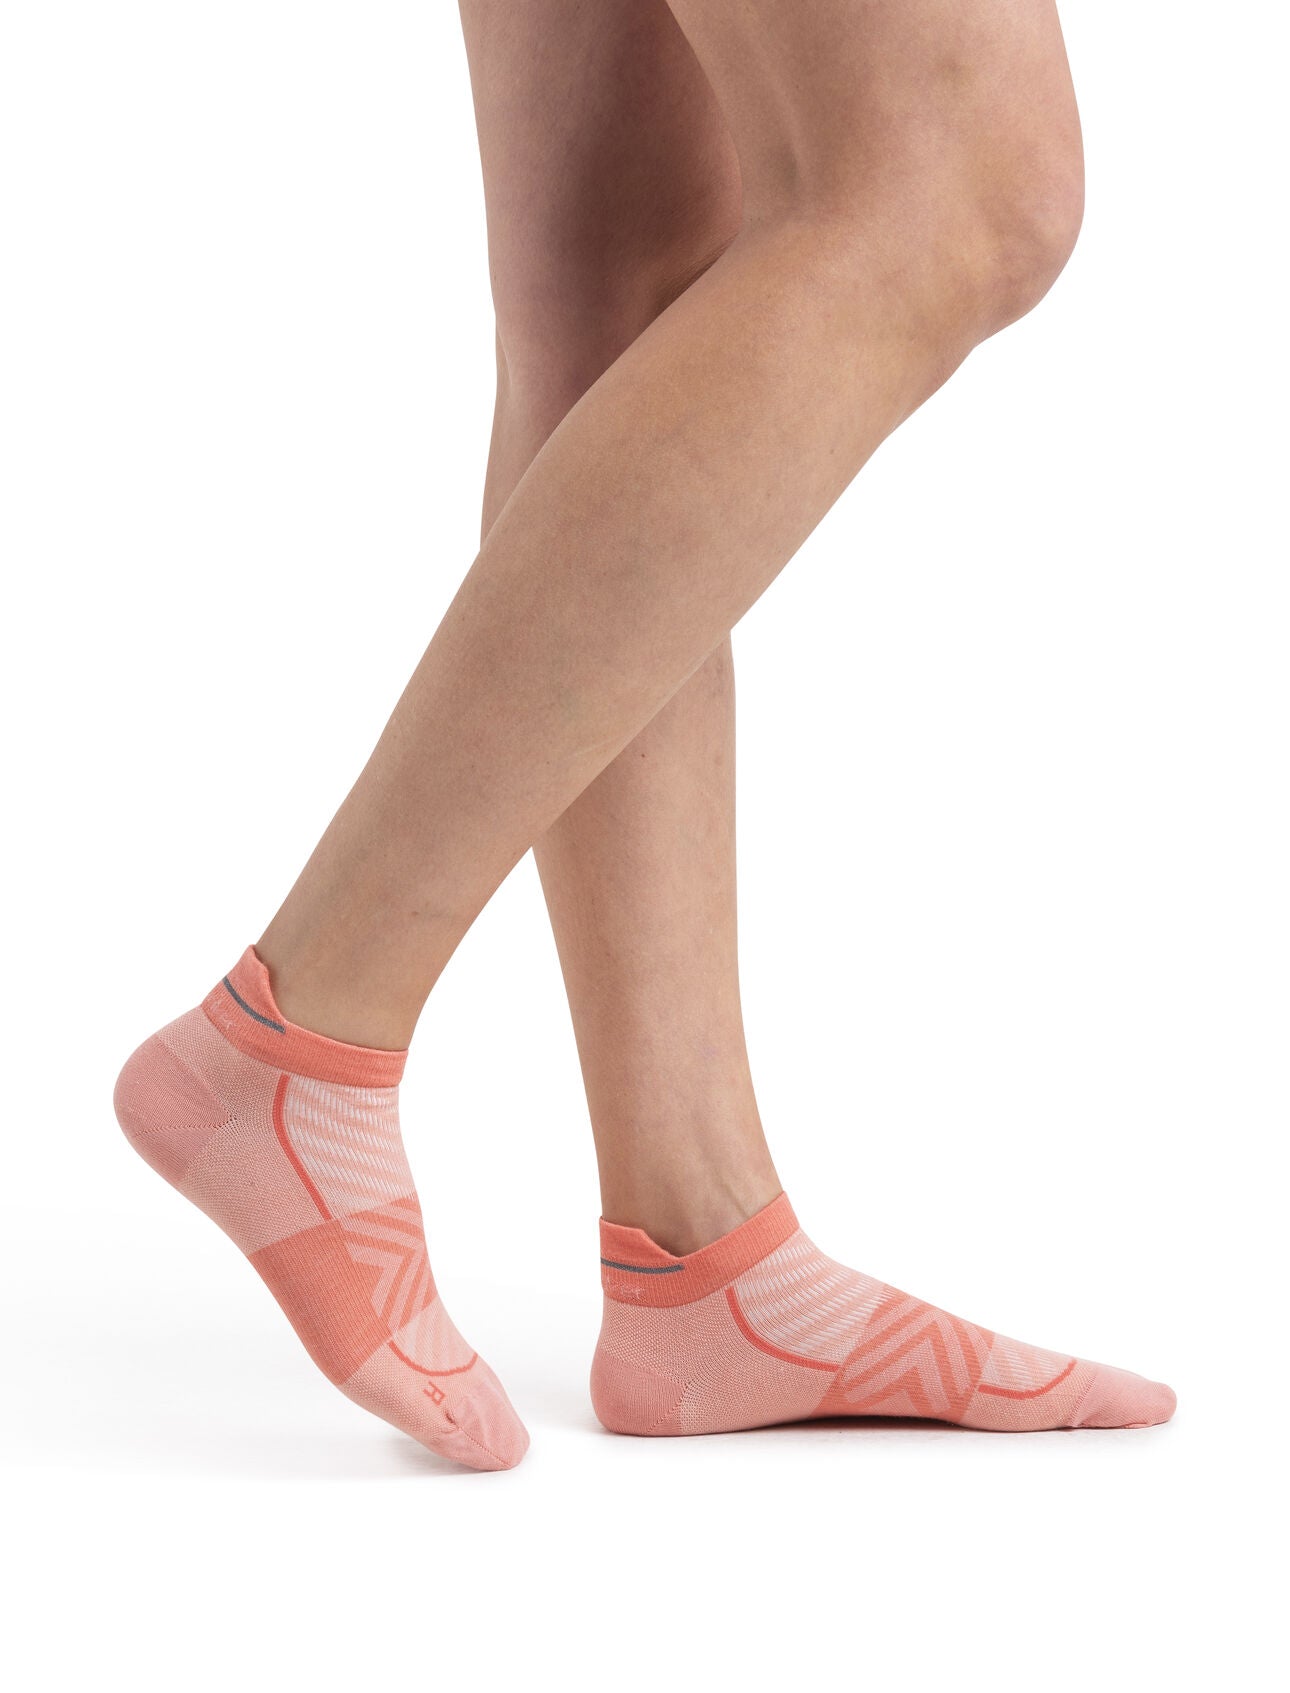 Icebreaker Merino Blend Run+ Ultralight Micro Socks (Women's) - Glow/Tang - Find Your Feet Australia Hobart Launceston Tasmania